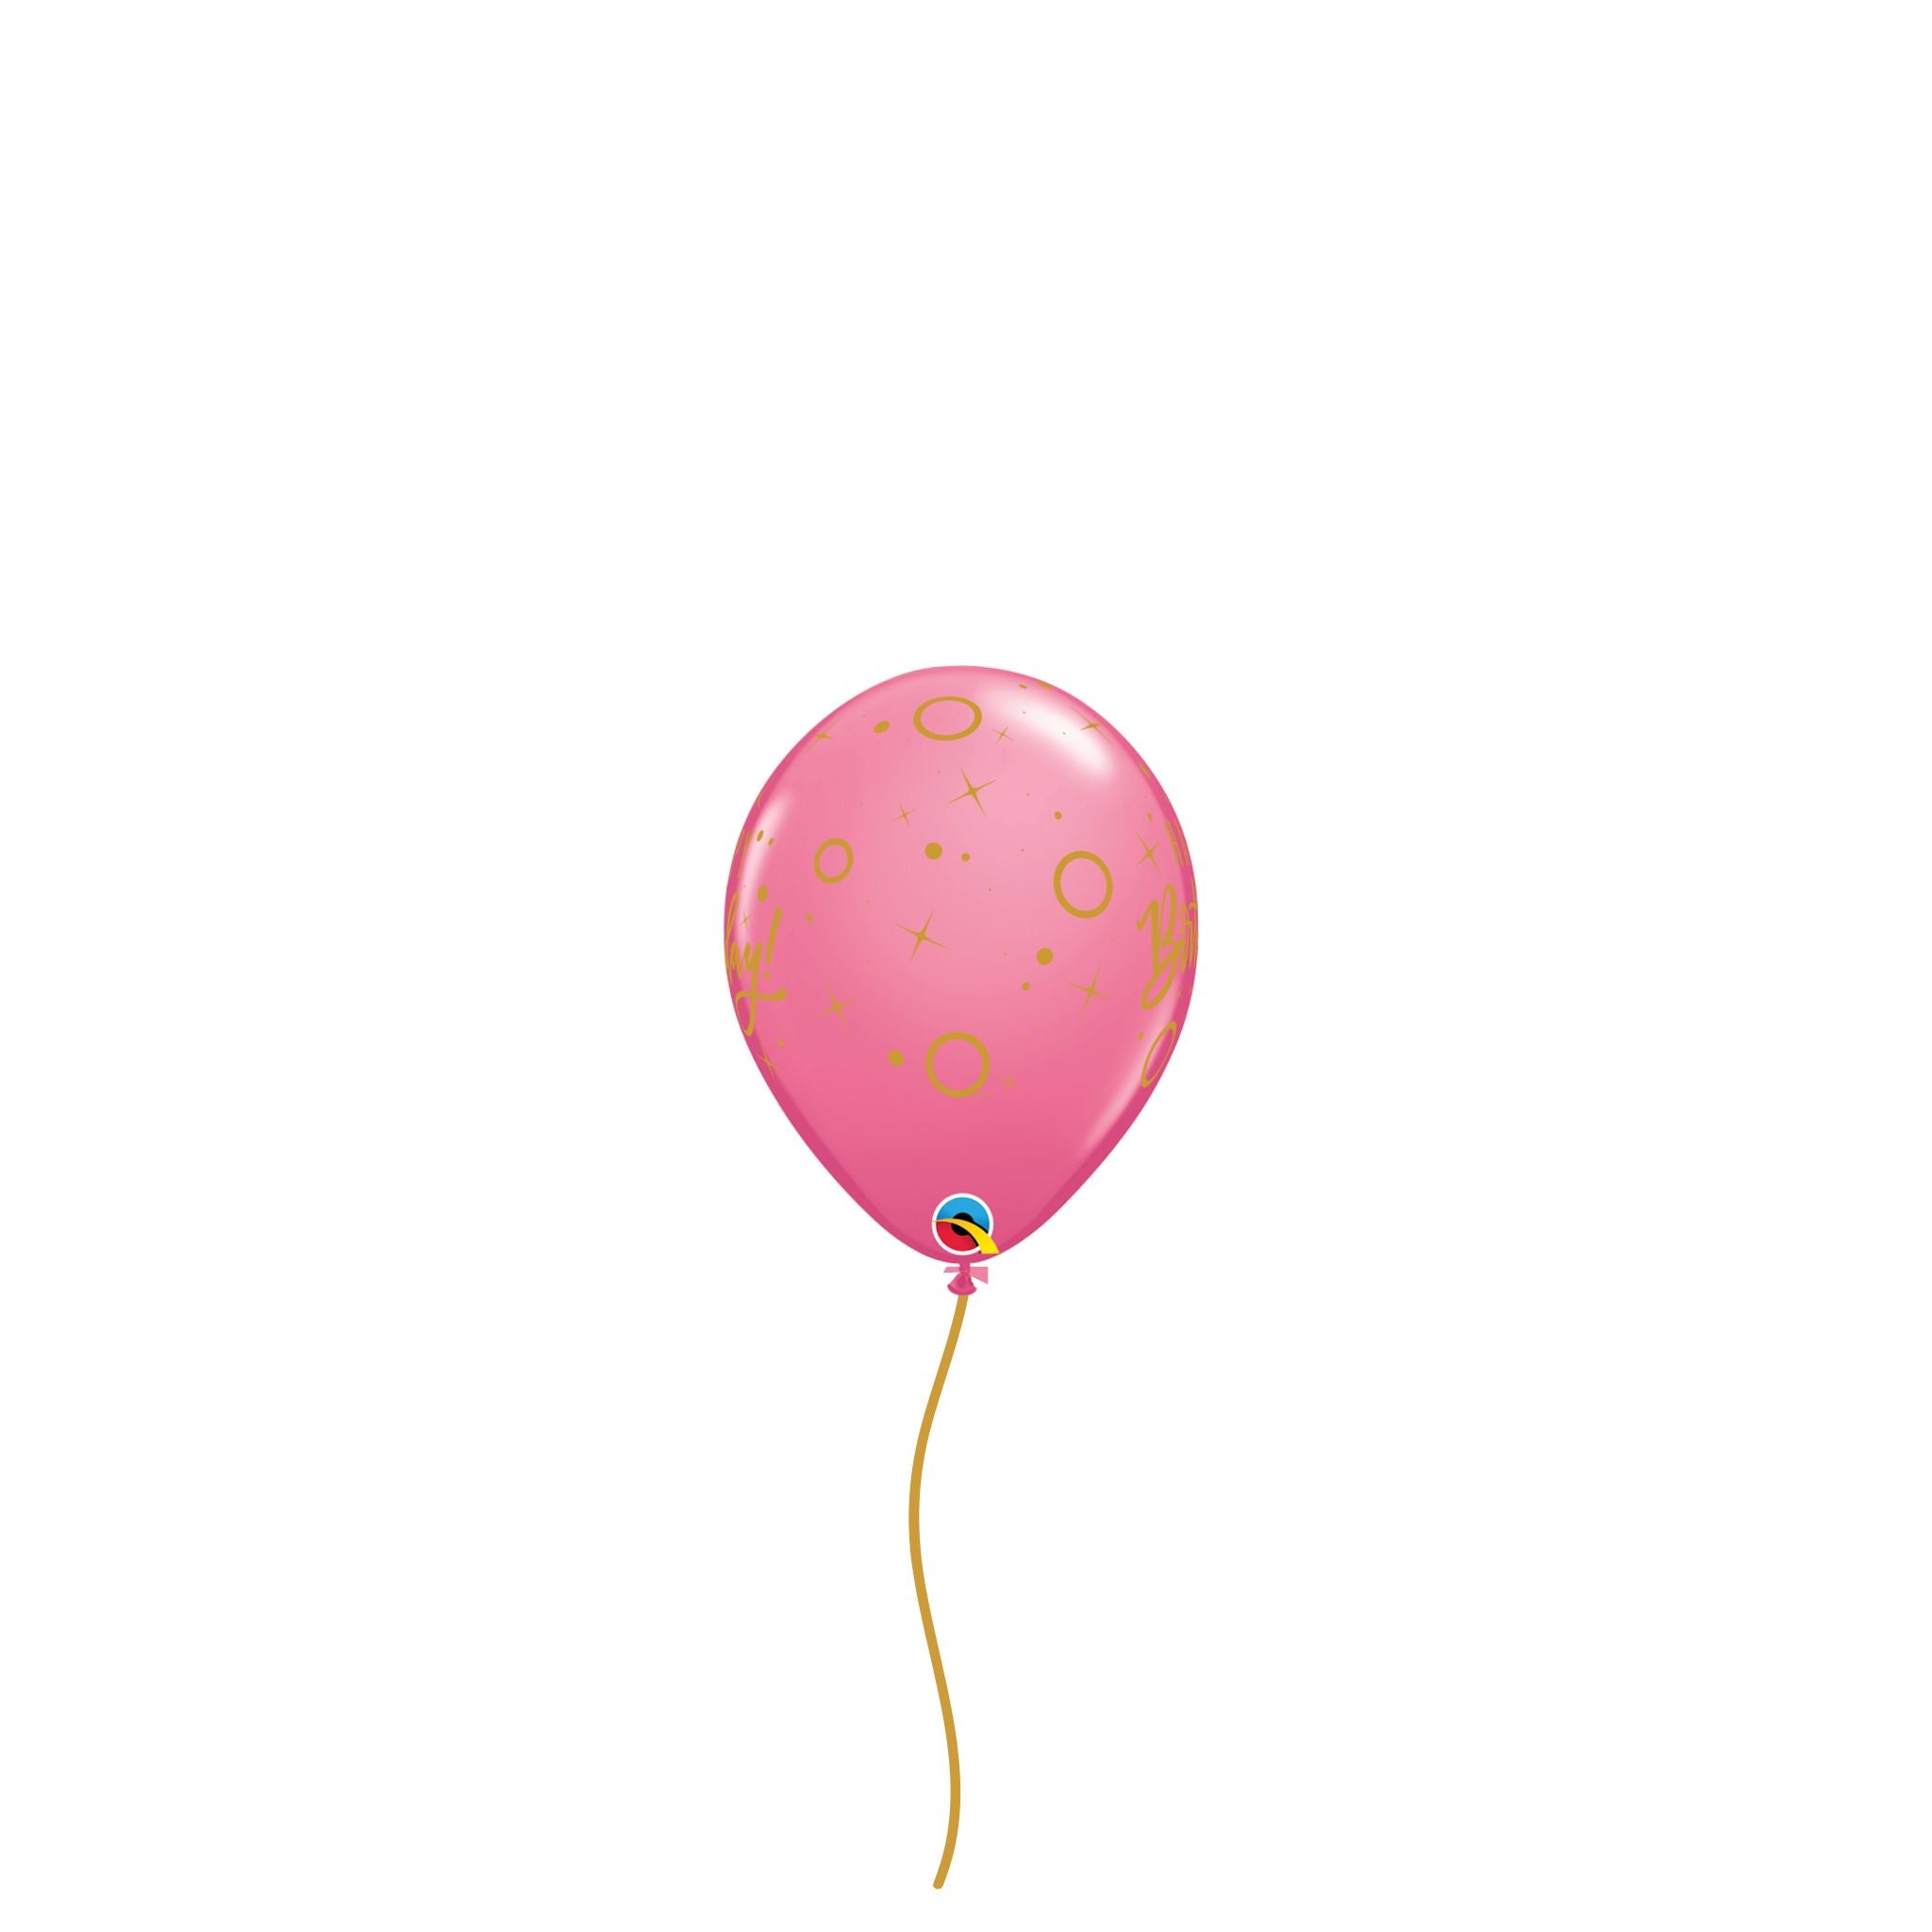 1 Latex Balloon with Helium